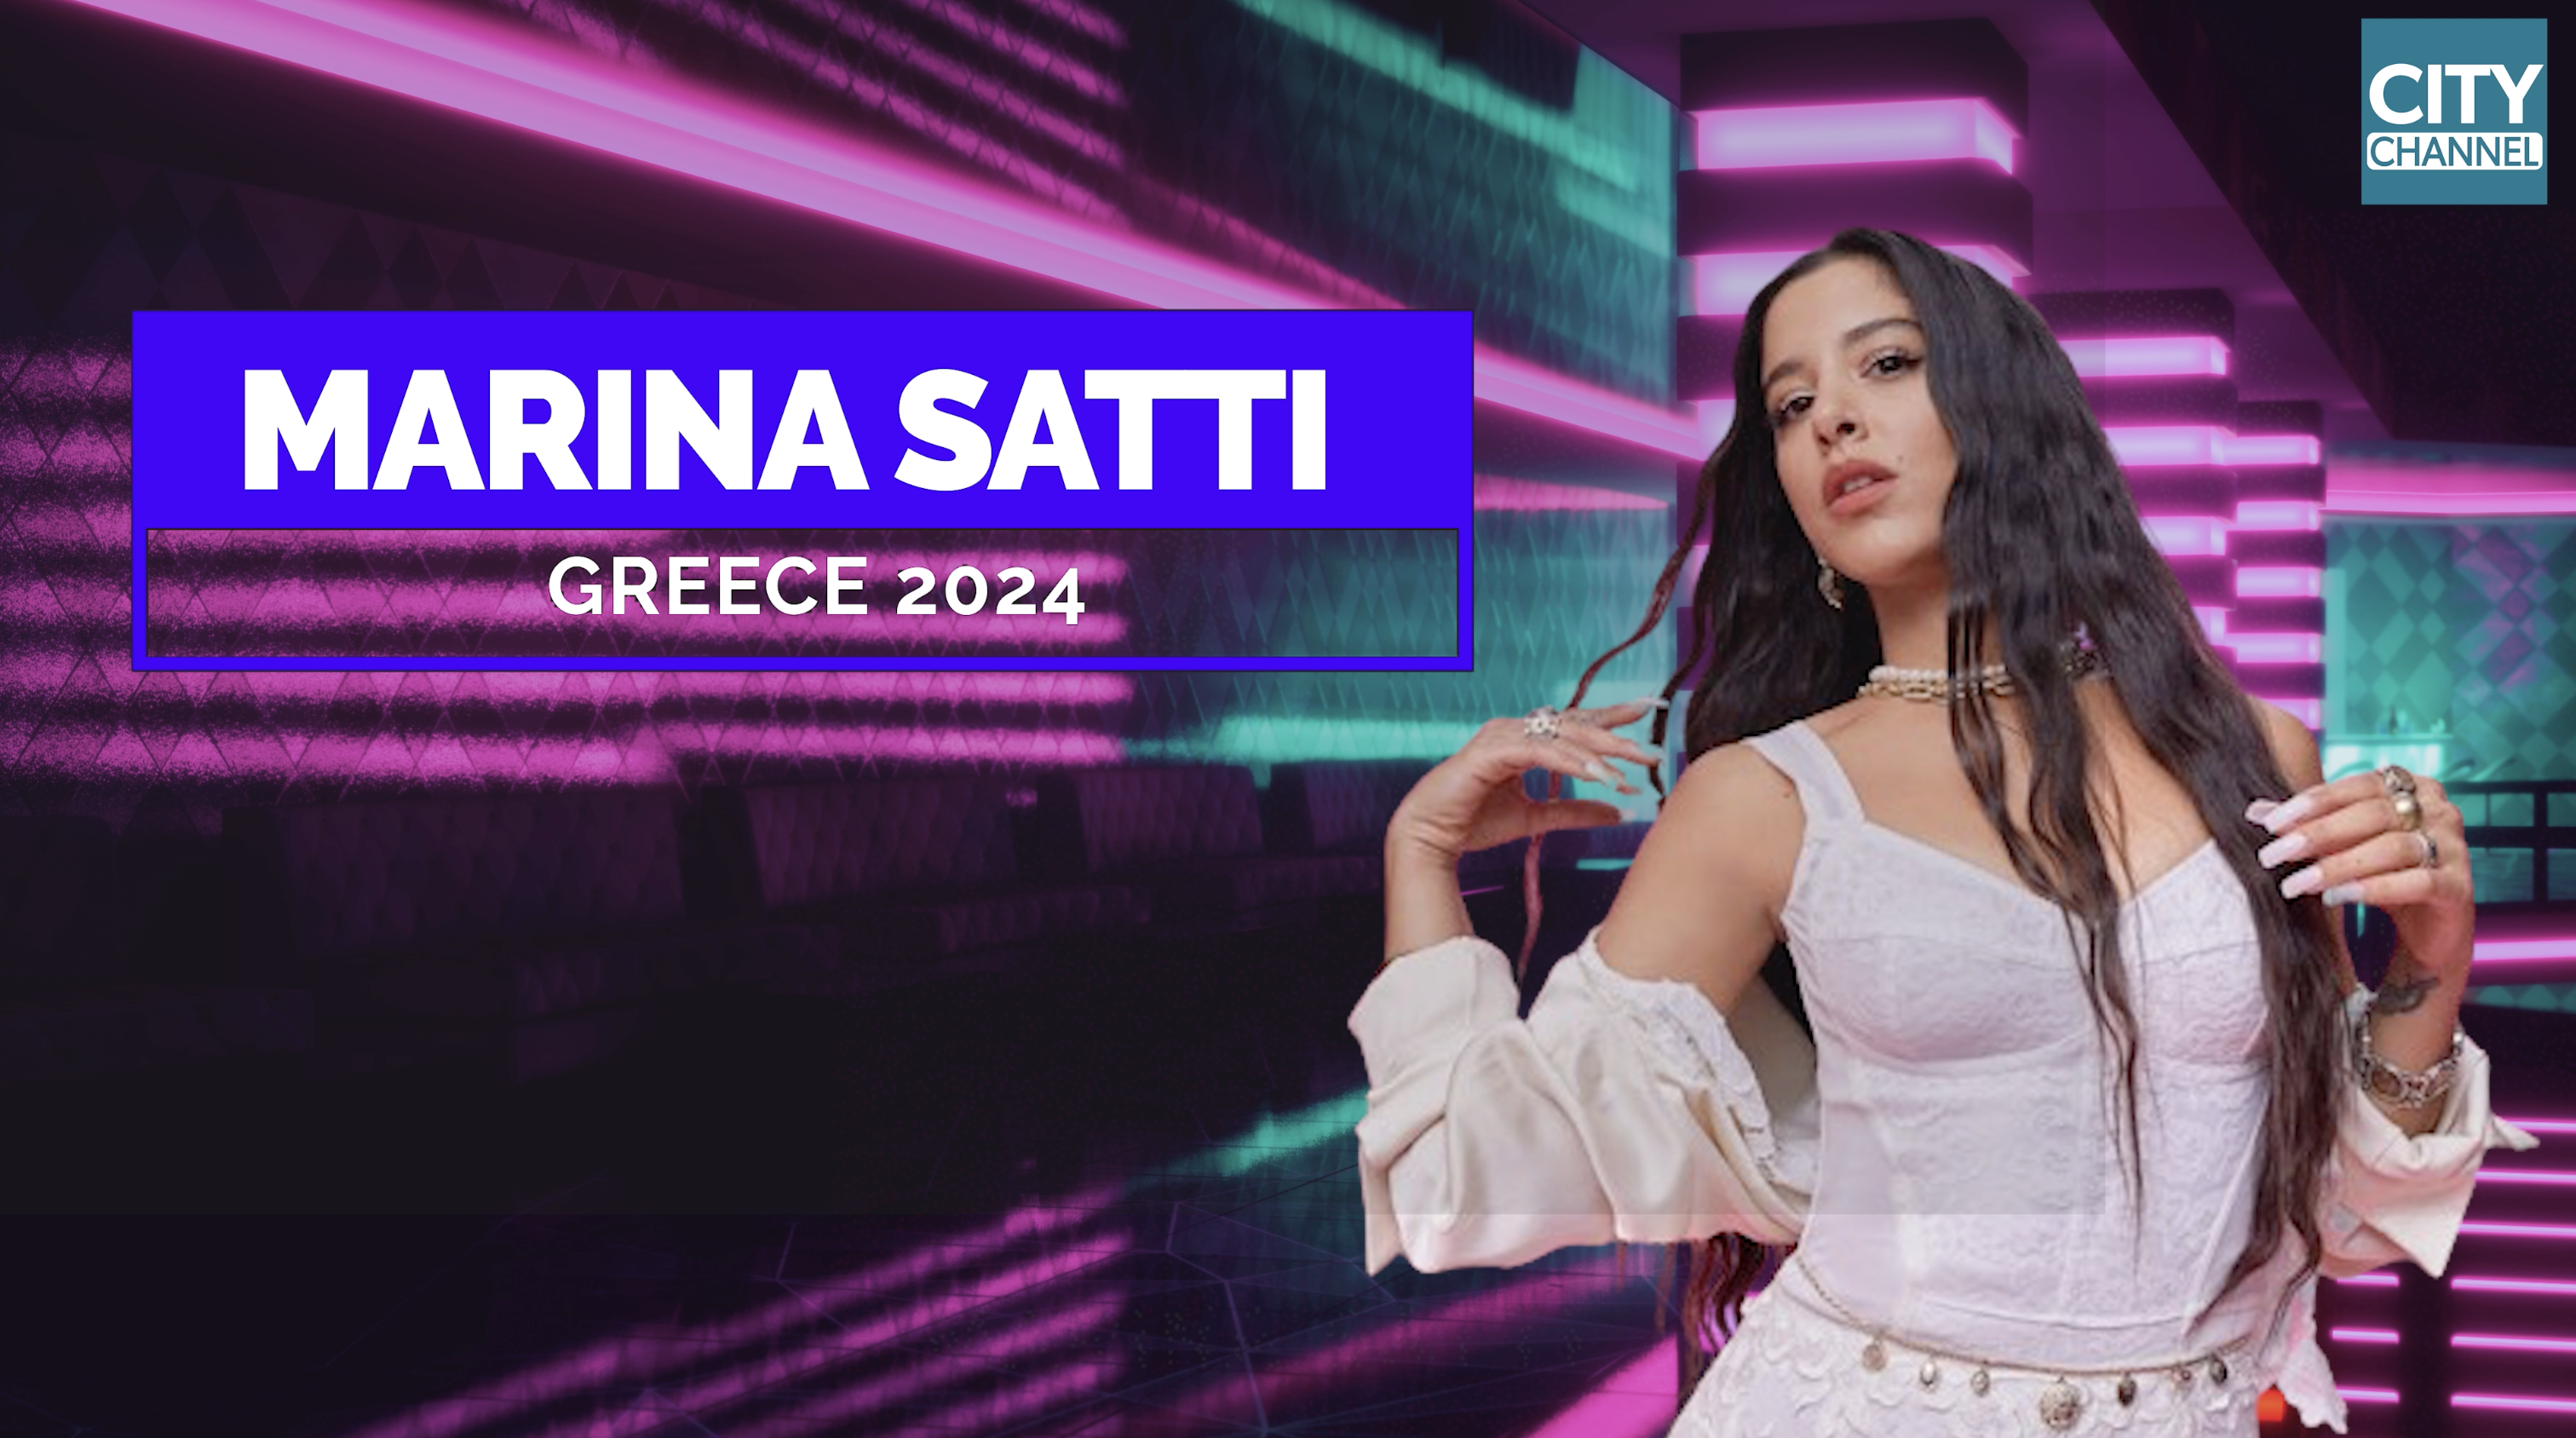 MARINA SATTI EUROVISION GREECE 2024 PROFILE VIDEO